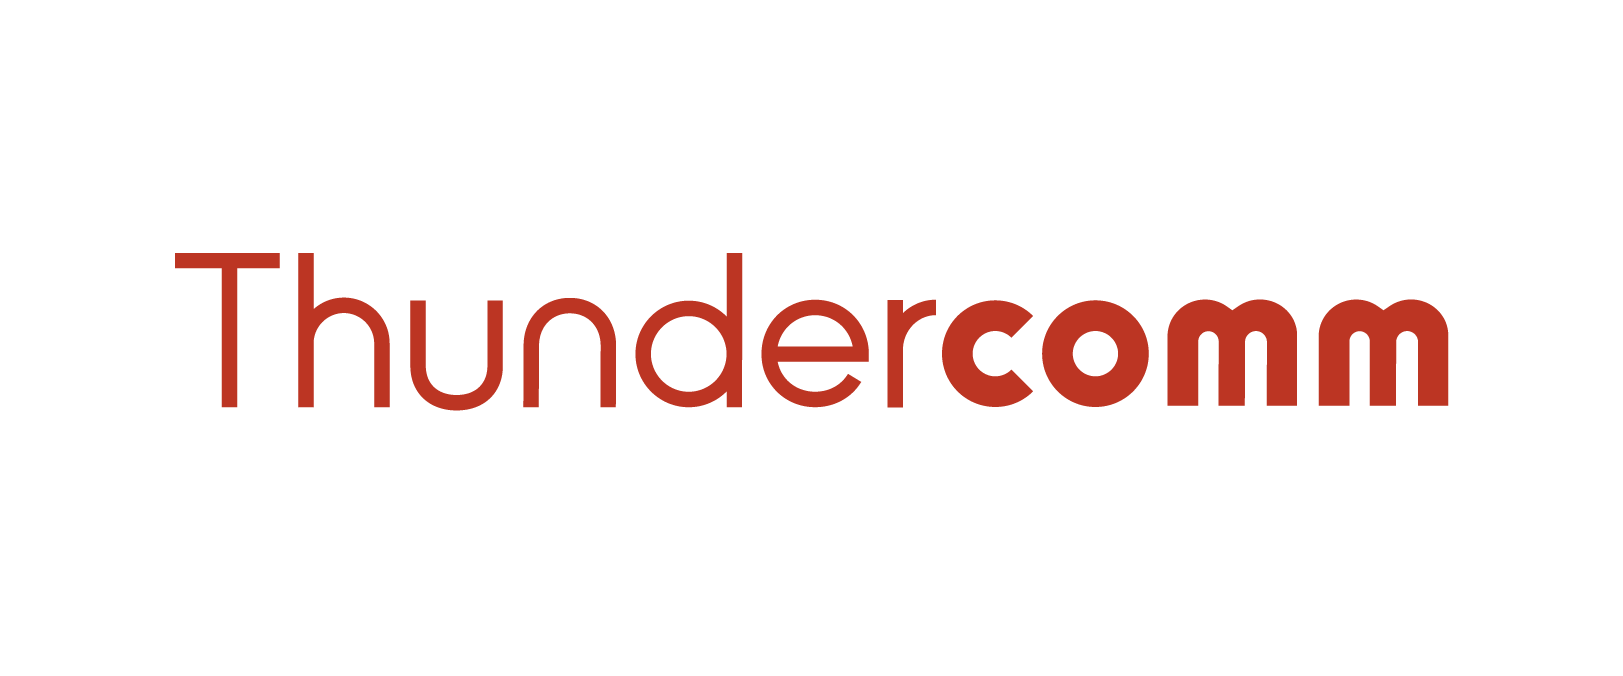 Thundercomm-logo-0624-01